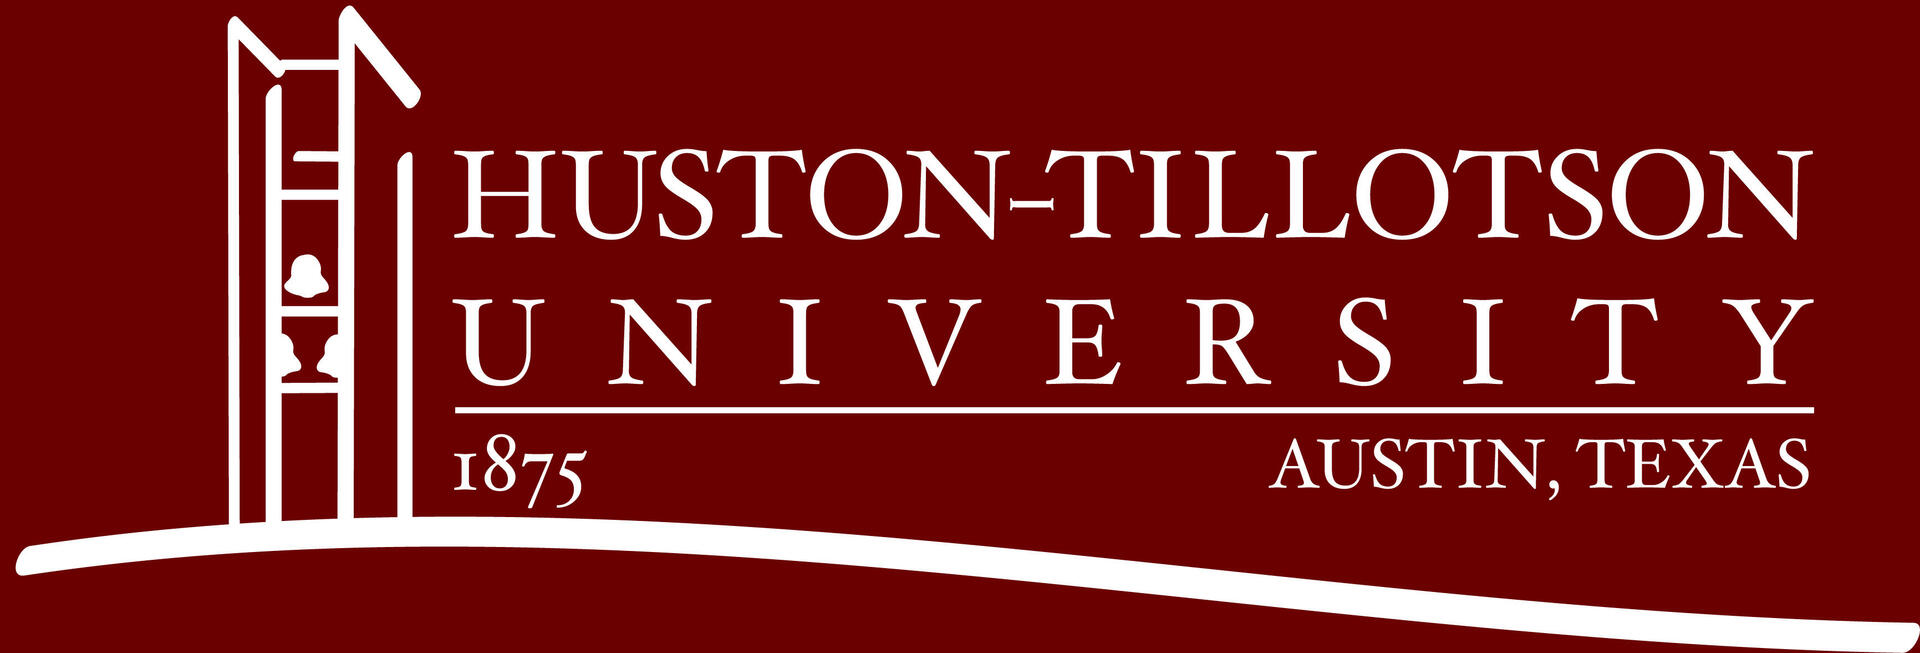 Huston-Tillotson University, Austin, TX